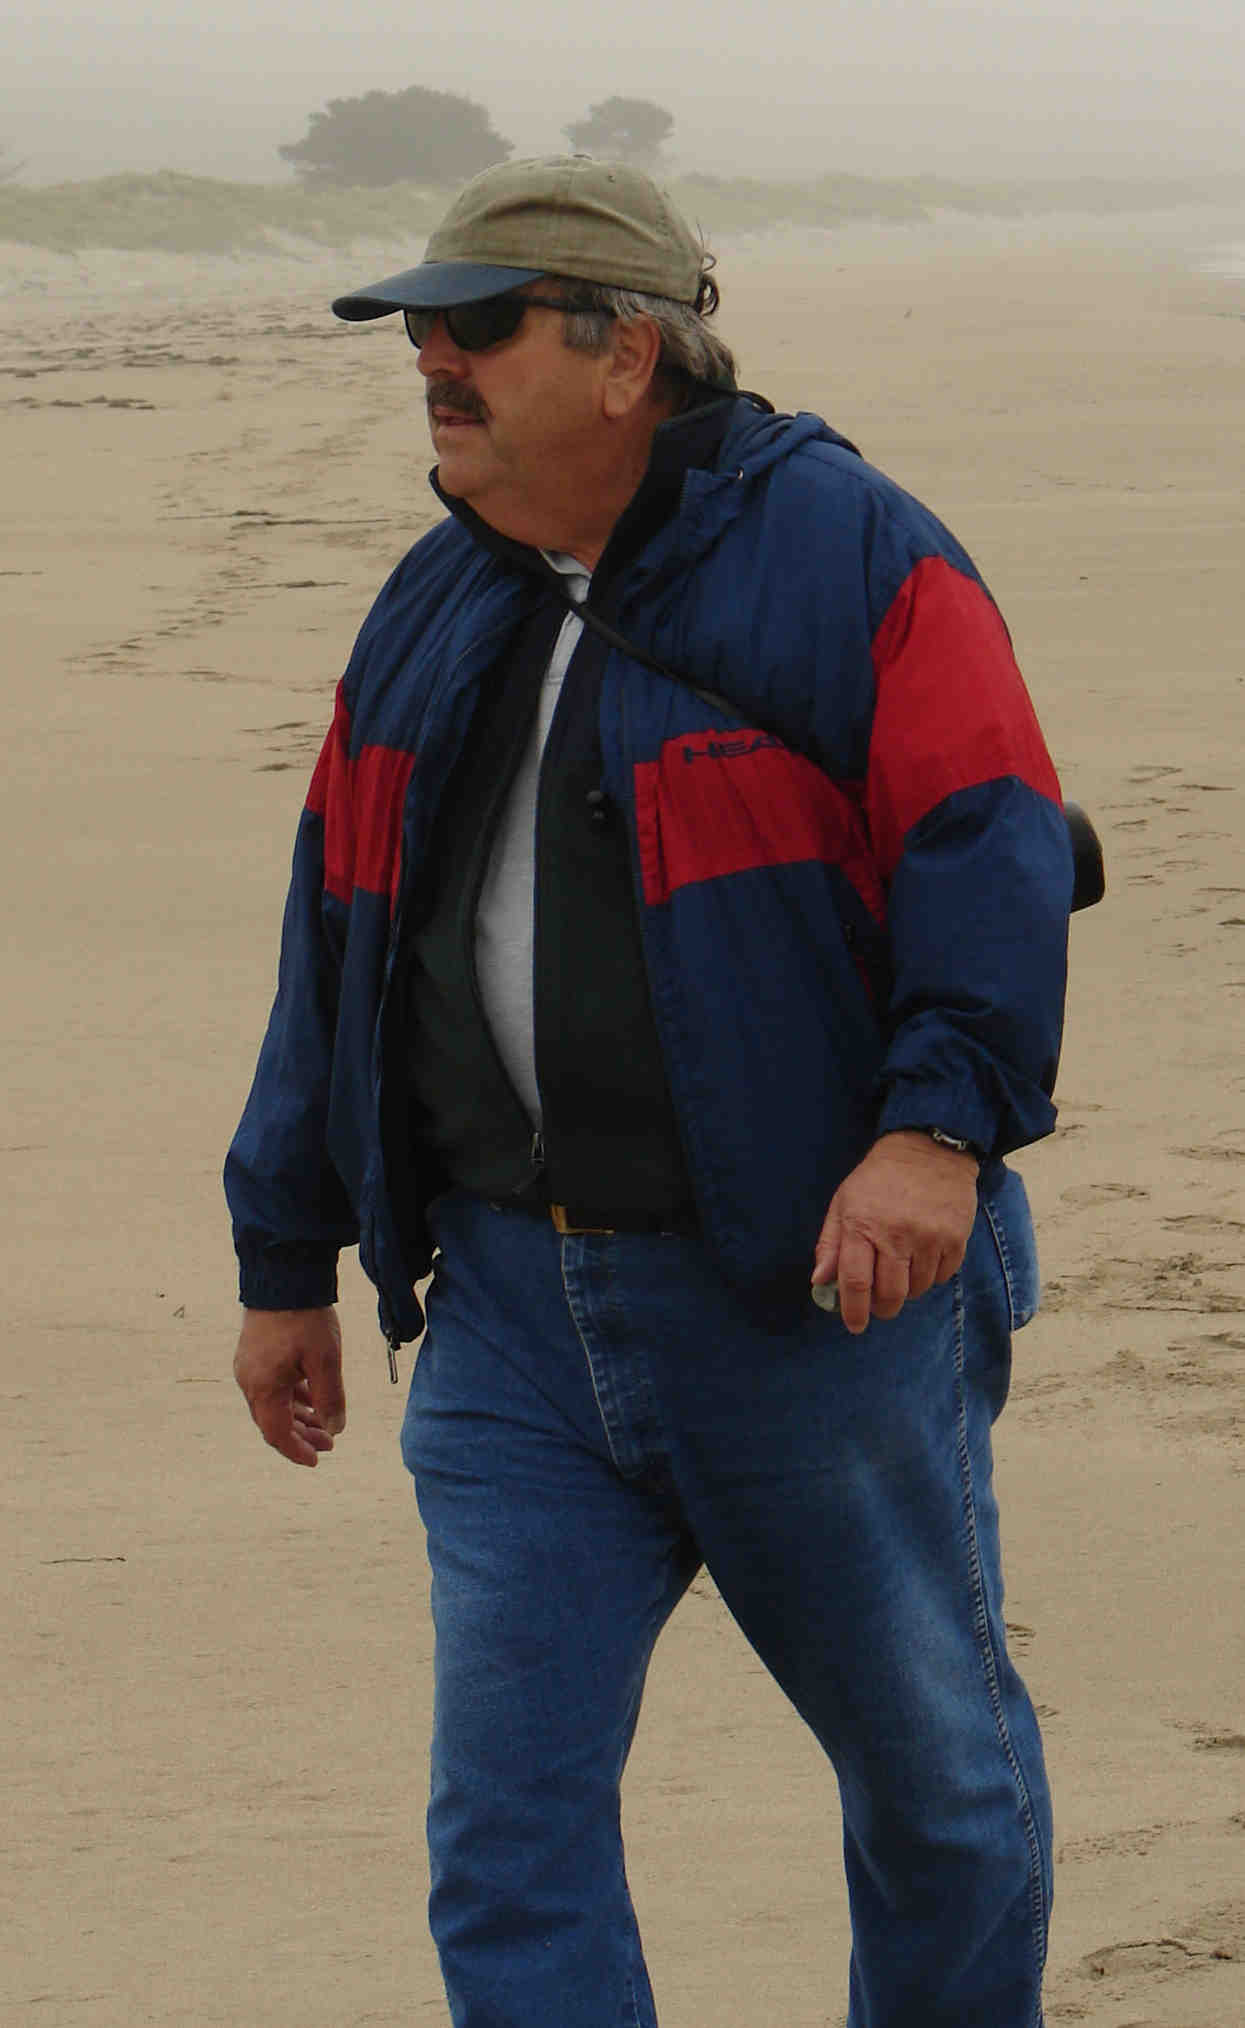 Picture of Richard Musselman on a foggy beach taken around 2006